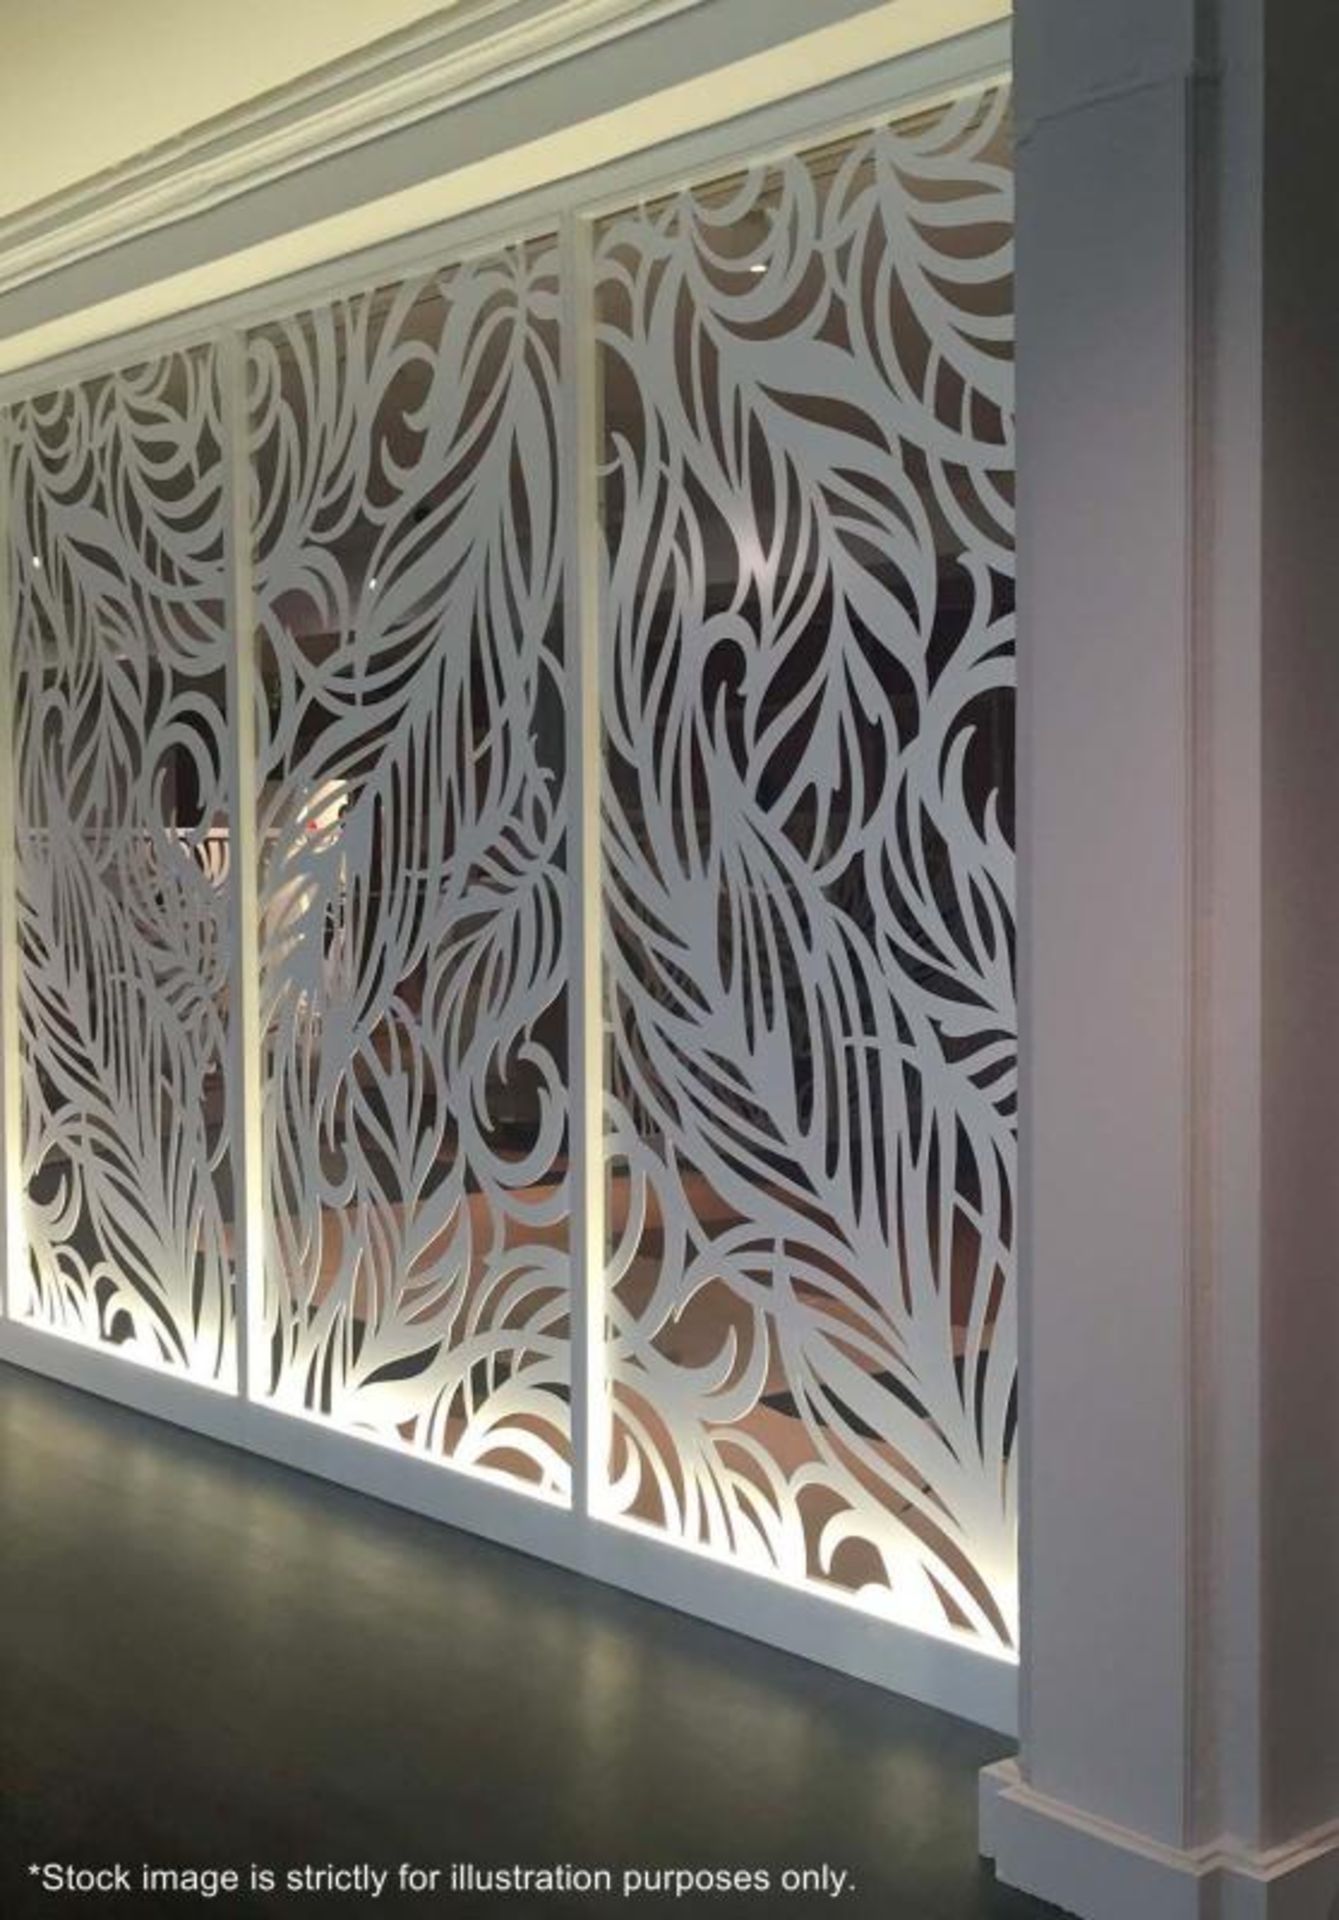 A Set Of 3 x Elegant 'Miles and Lincoln' Framed Laser Cut Metal Room Divider Panels In A Feather Des